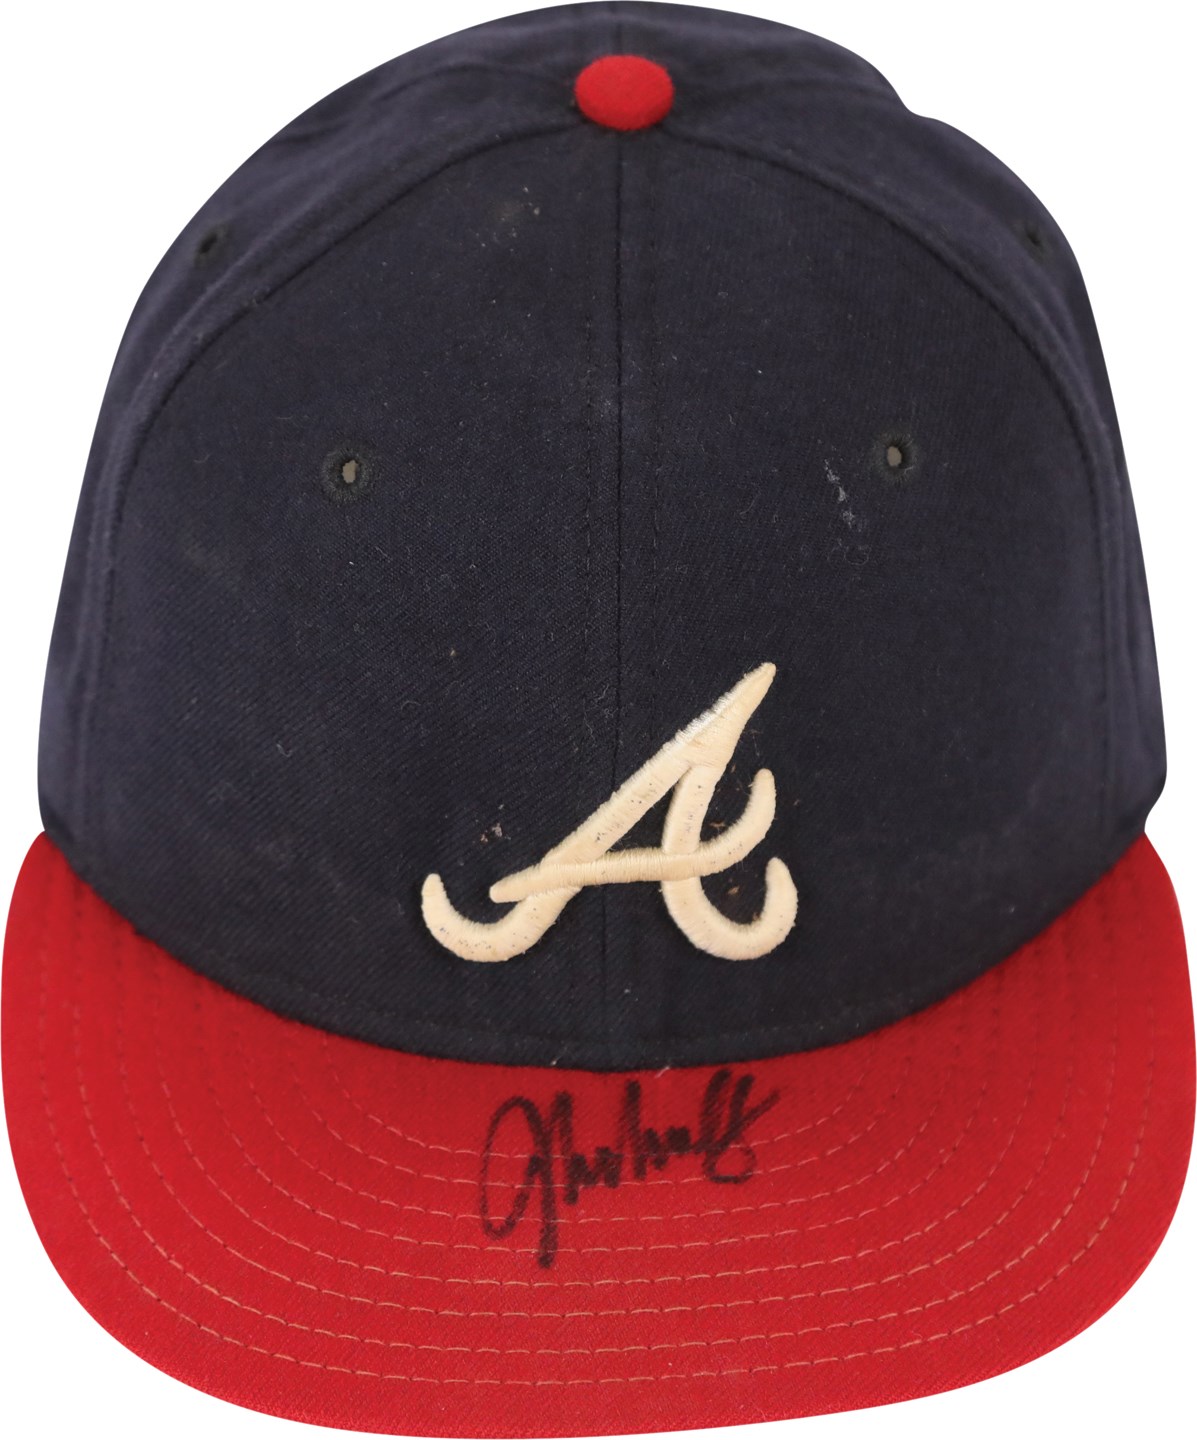 Baseball Equipment - 1997 John Smoltz Atlanta Braves Signed Game Used Hat Attributed to NLCS (Coach COA)